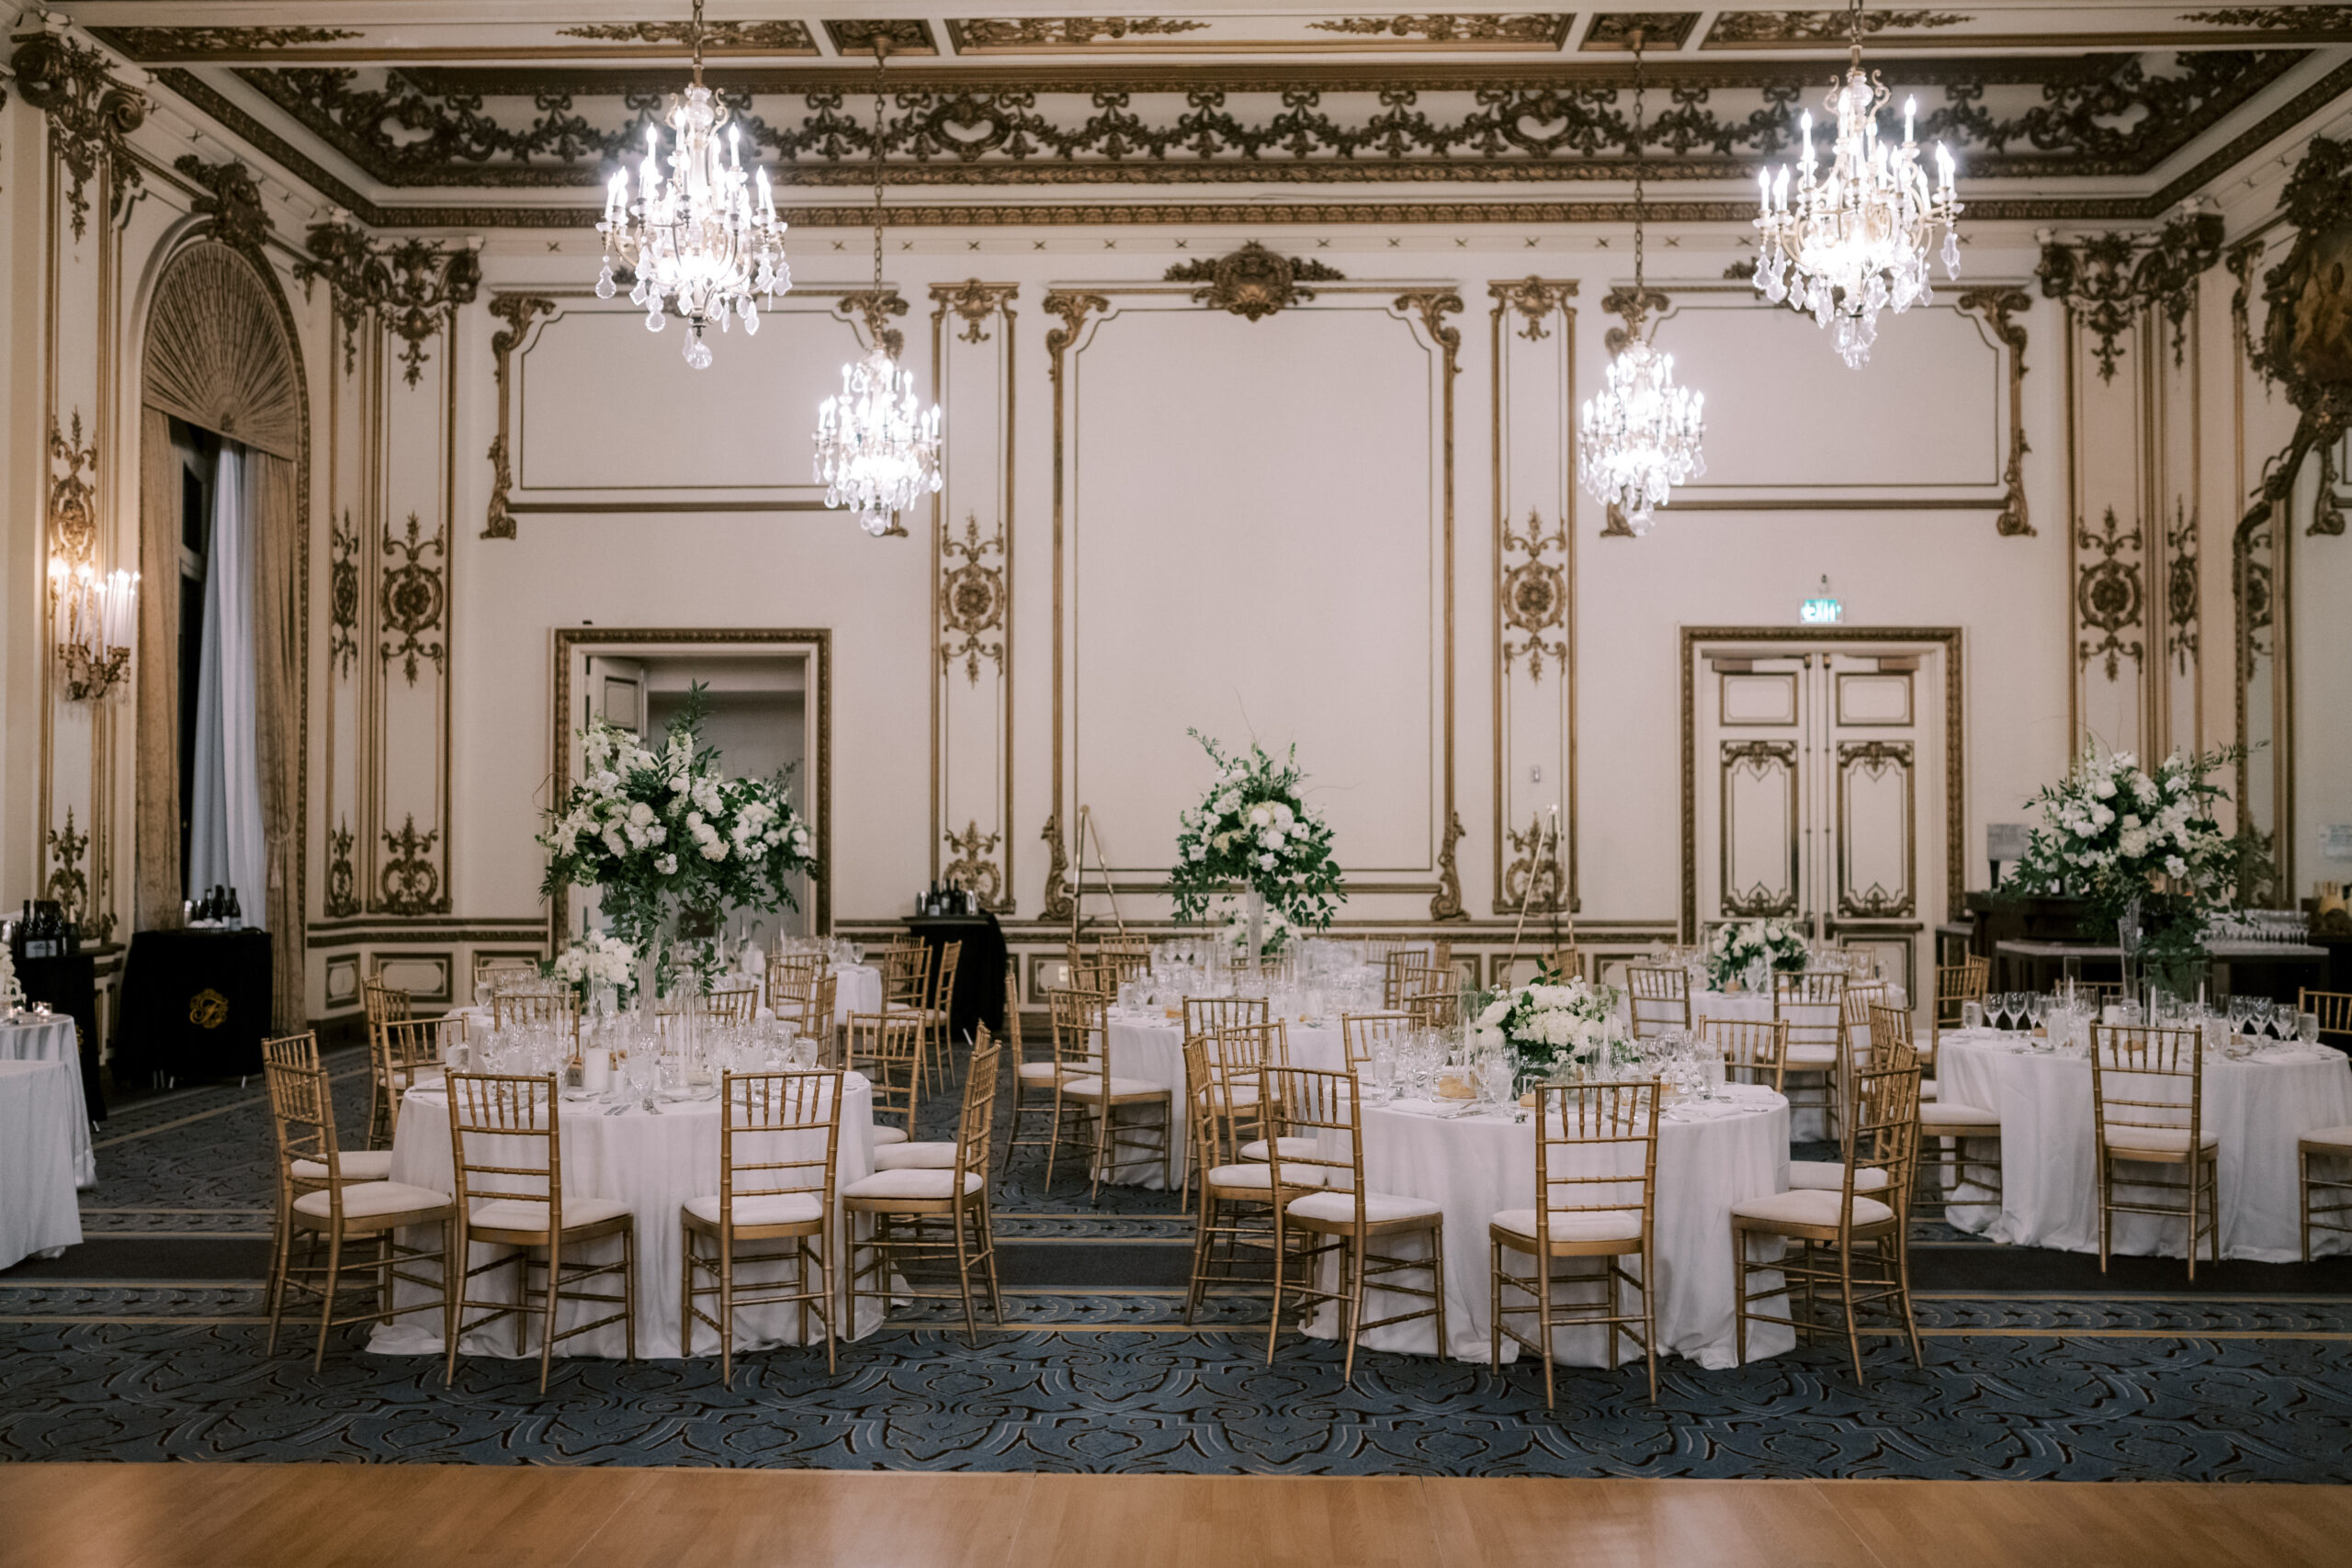 Fairmont San Francisco wedding reception ballroom details